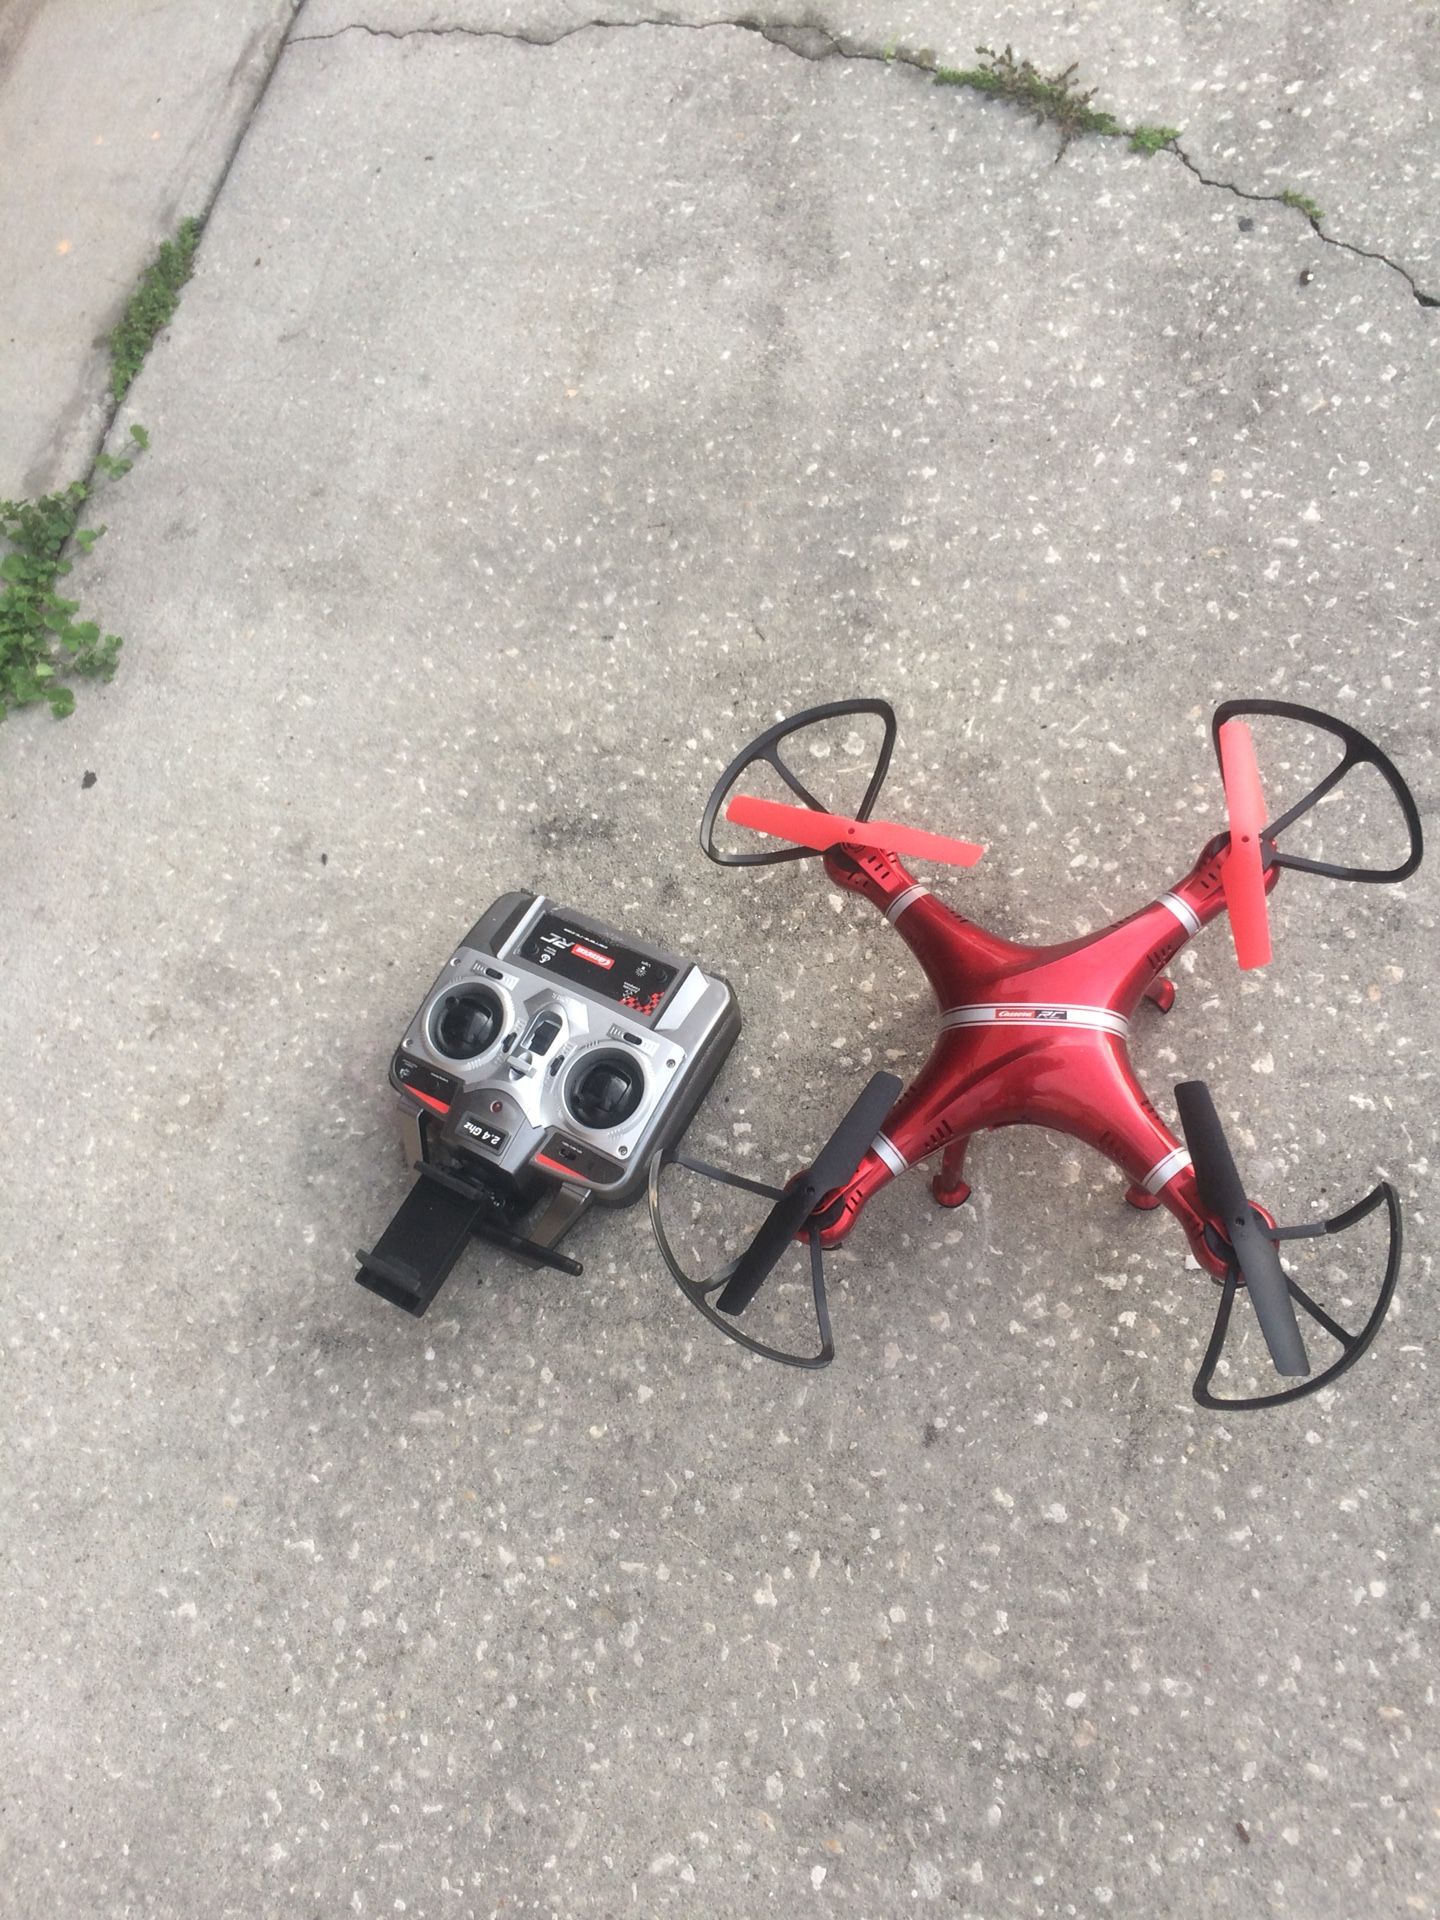 Carrera RC drone with camera